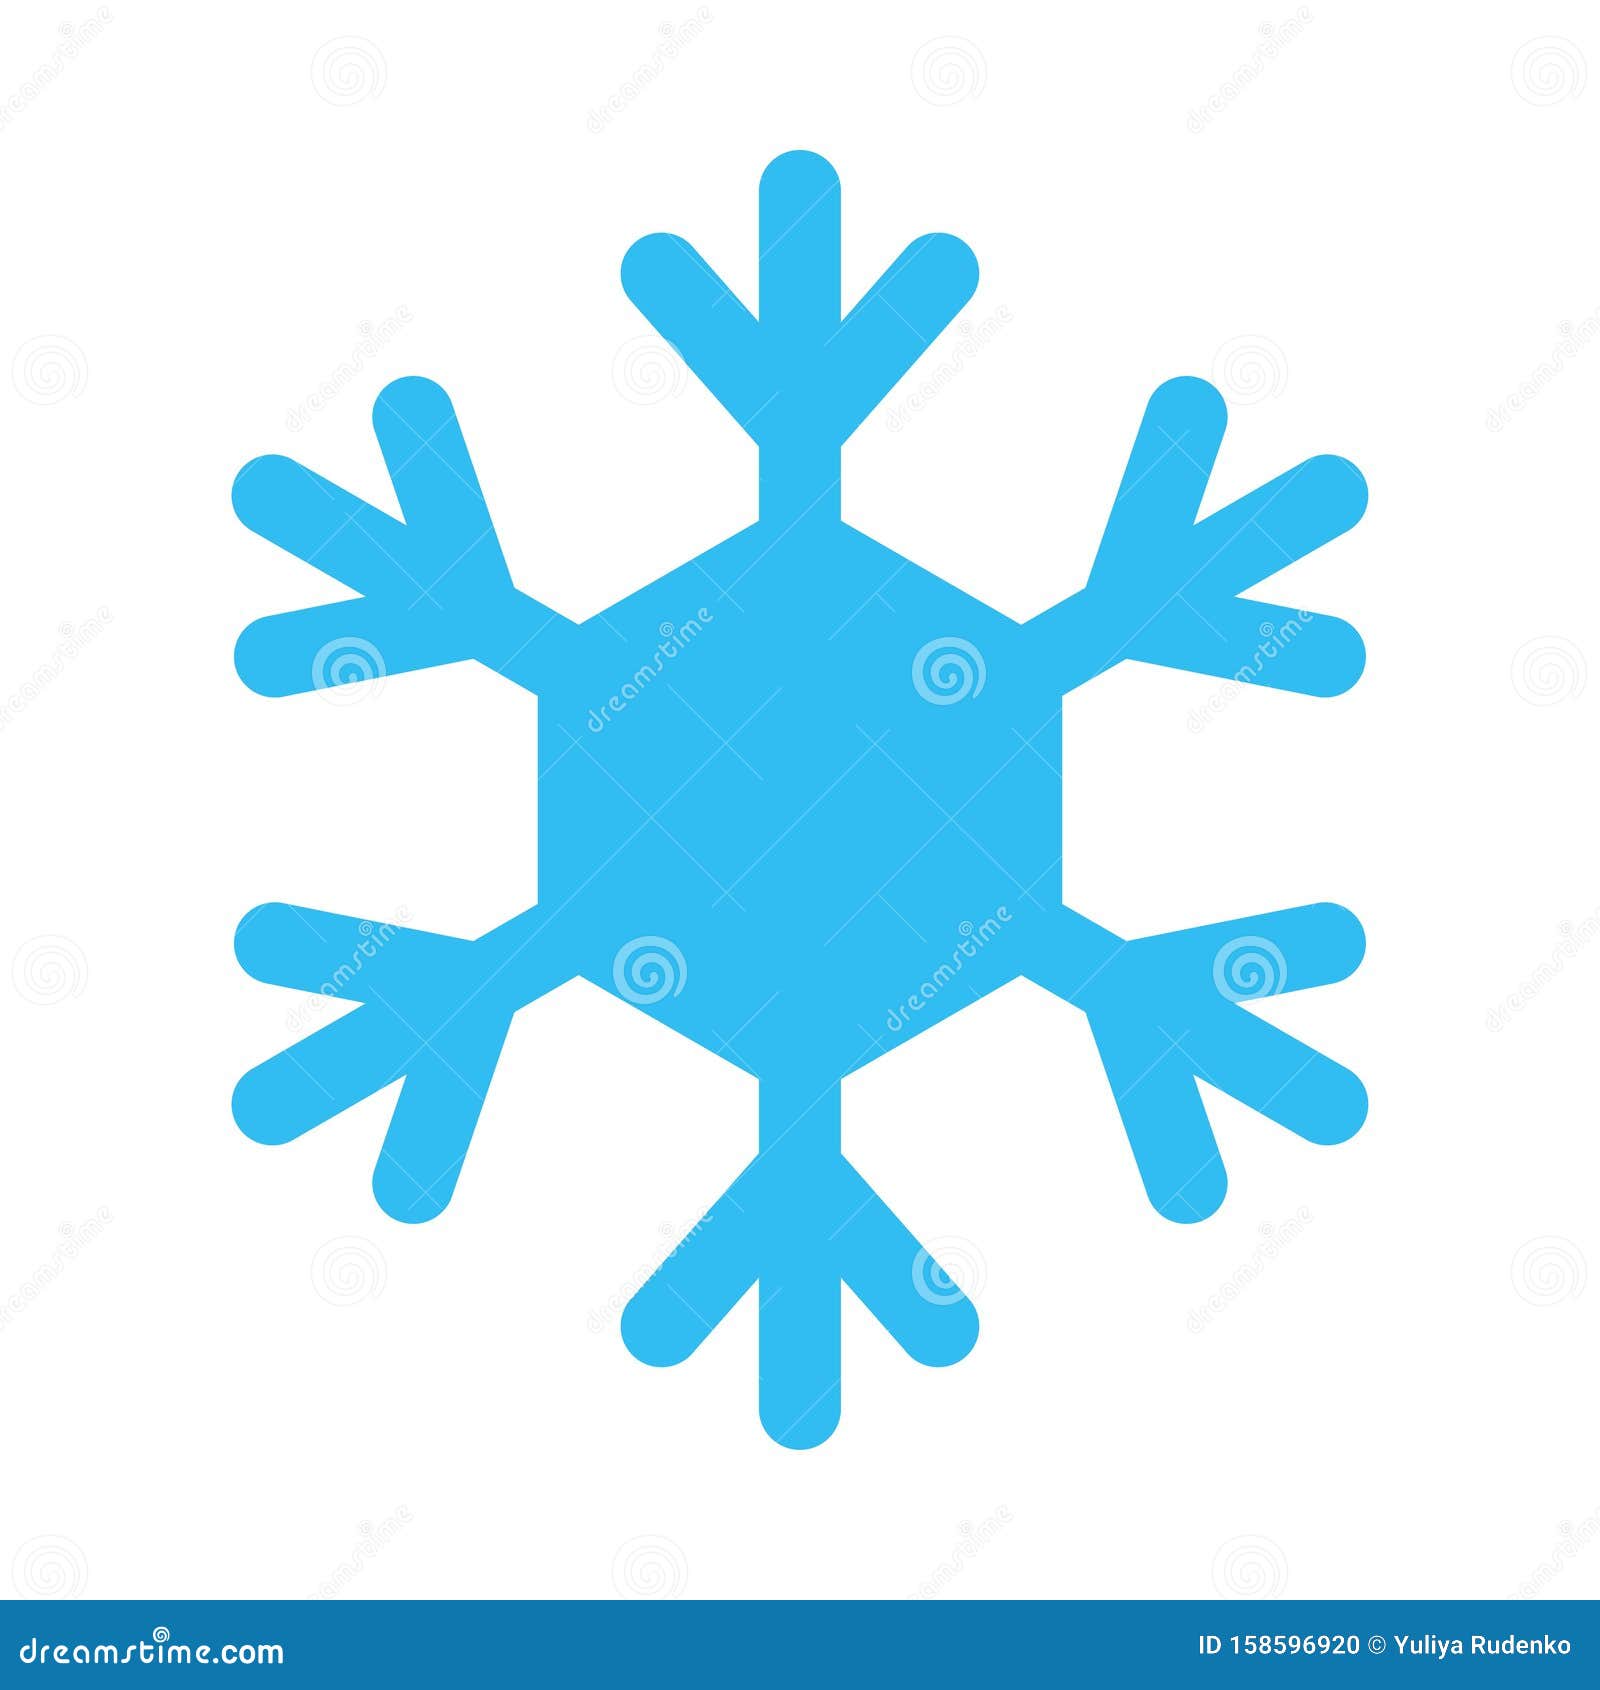 snowflake sign. blue snowflake icon  on white background. snow flake silhouette.  of snow, holiday, cold